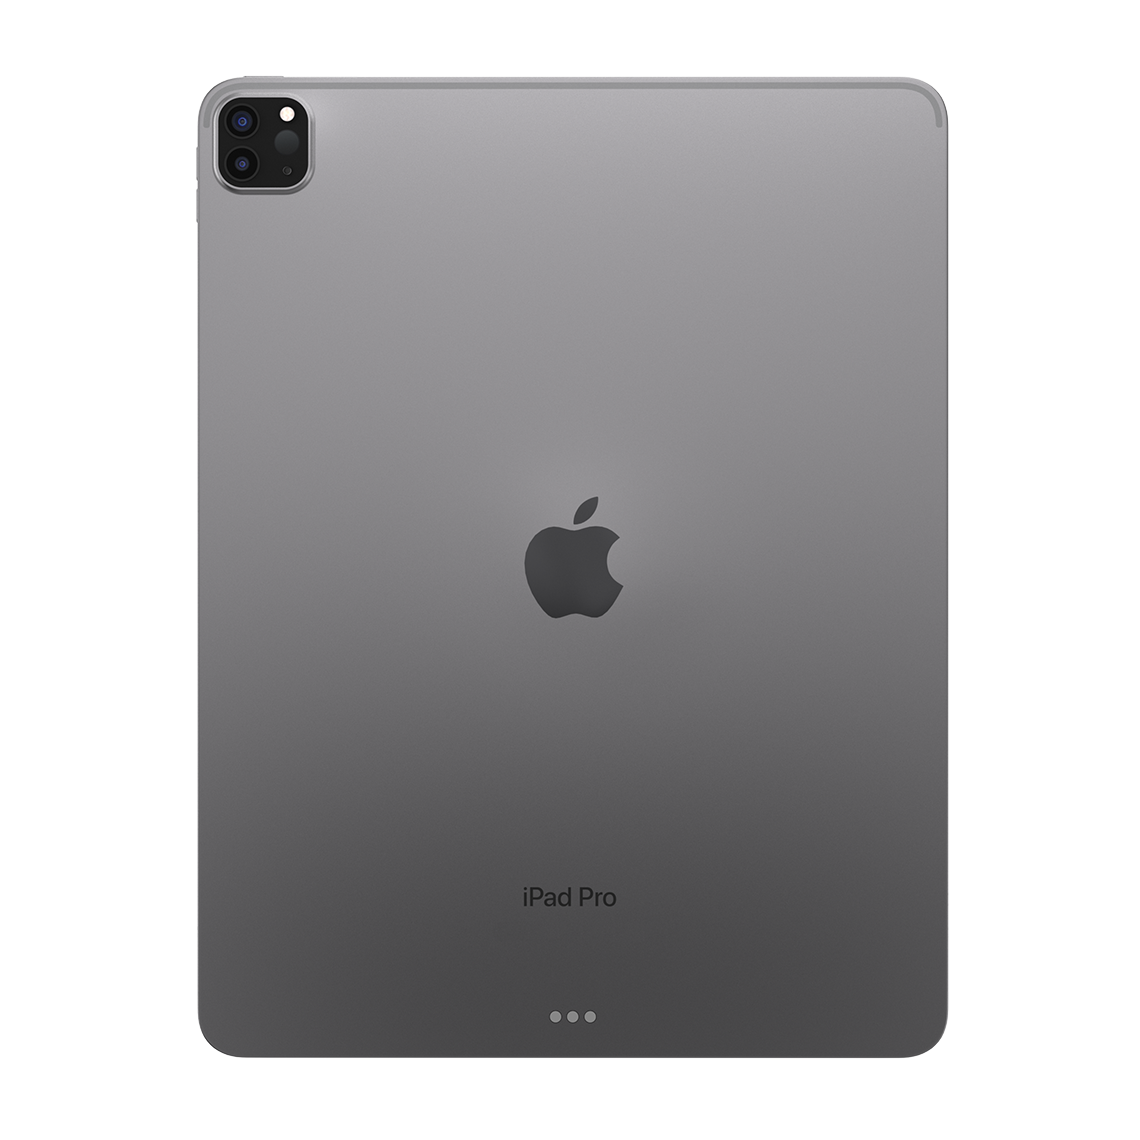 Apple iPad Pro 12.9-inch 5th Generation - Space Gray - 256GB, Wi-Fi, Grade A